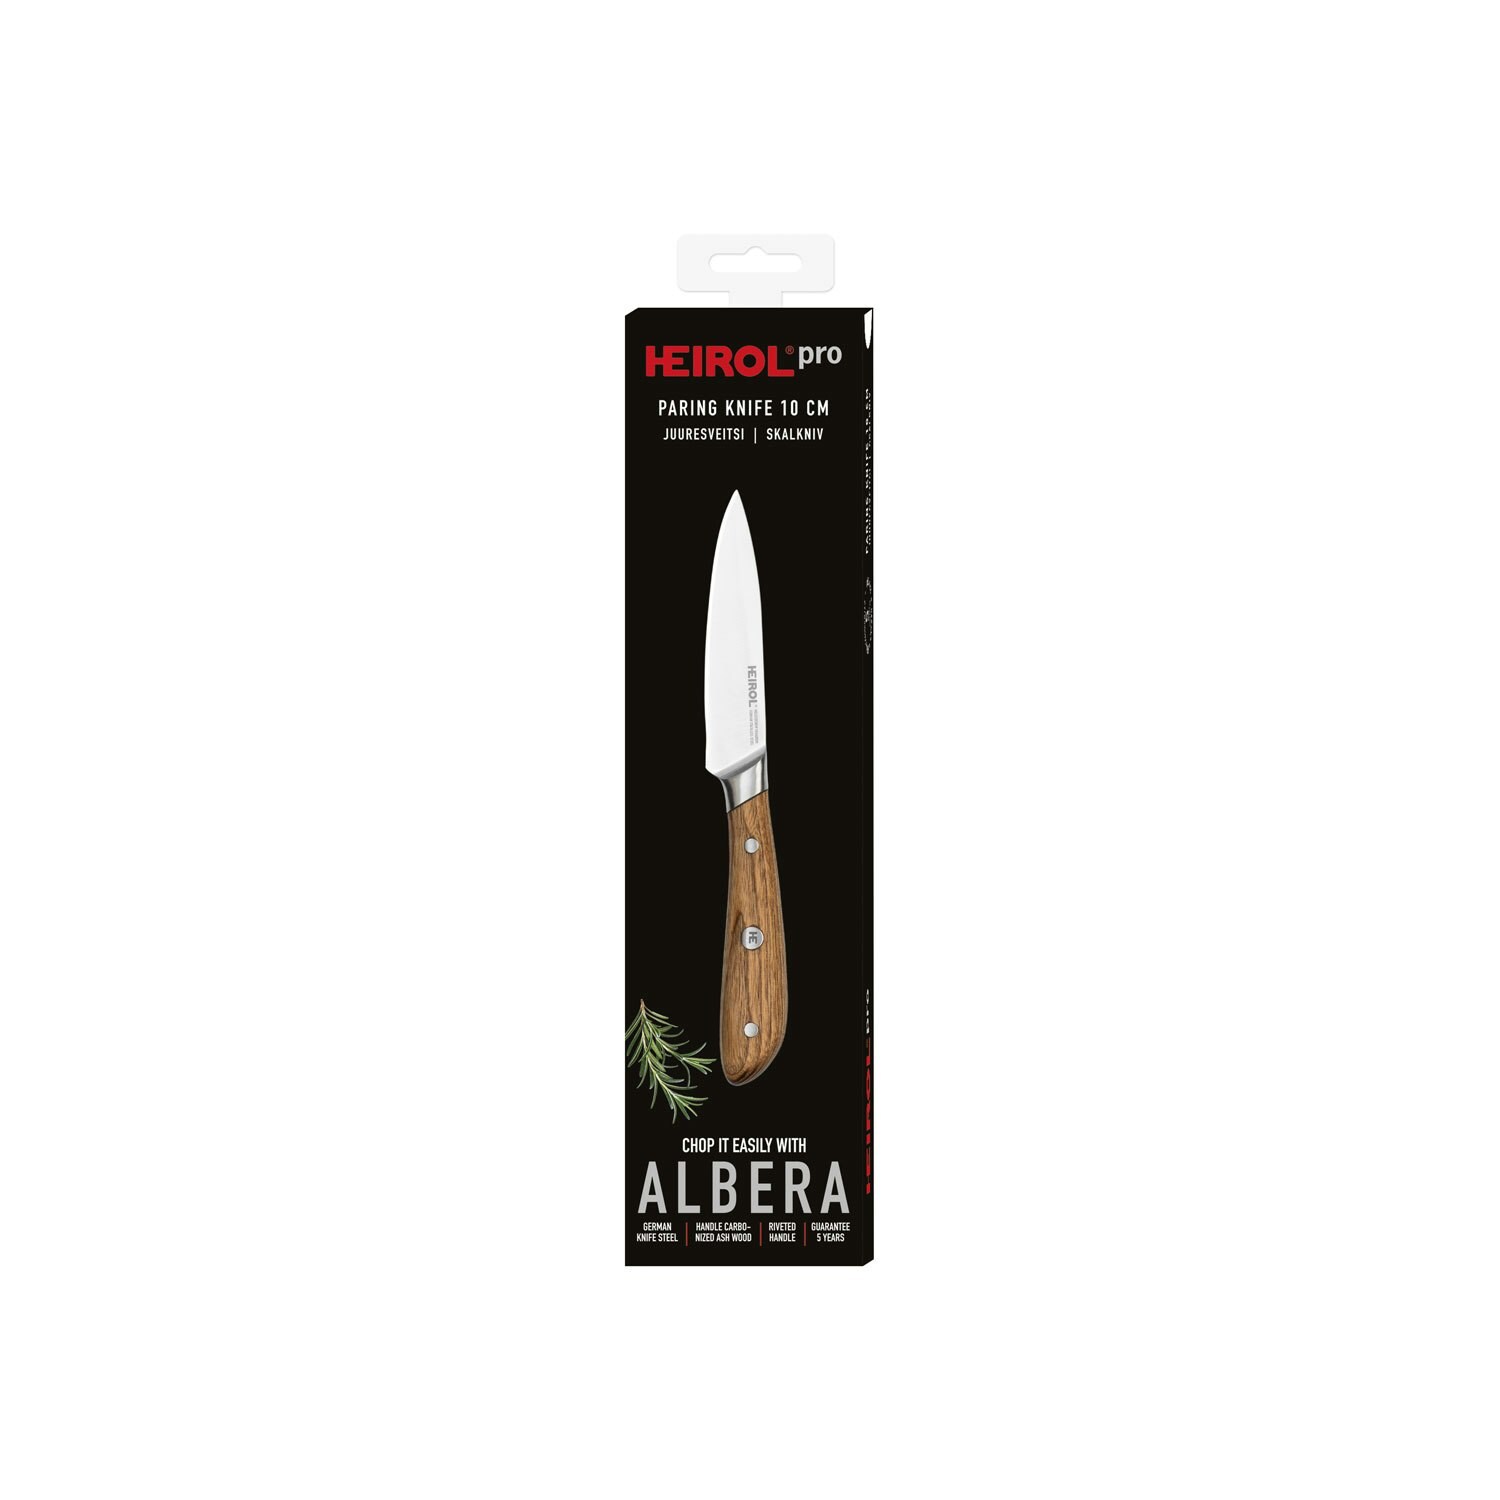 https://royaldesign.com/image/2/heirol-albera-paring-knife-10-cm-1